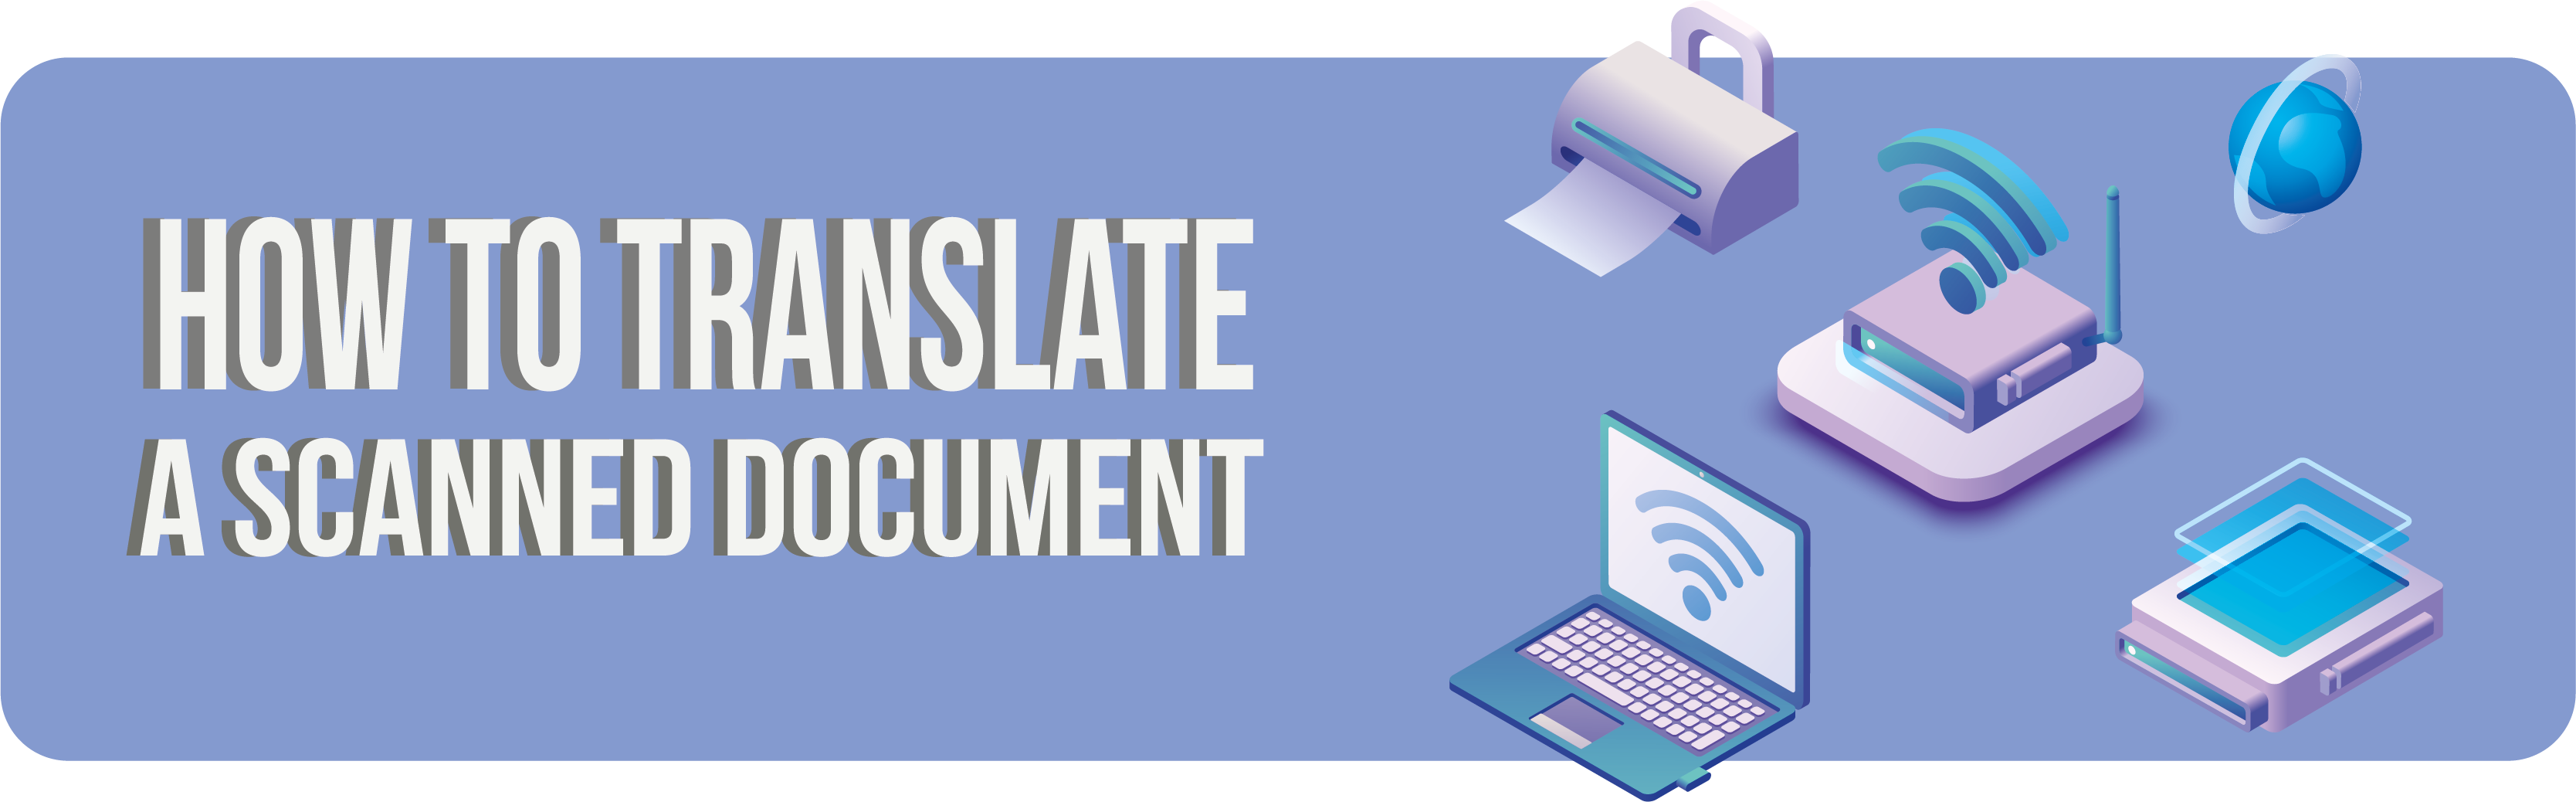 translate a scanned document